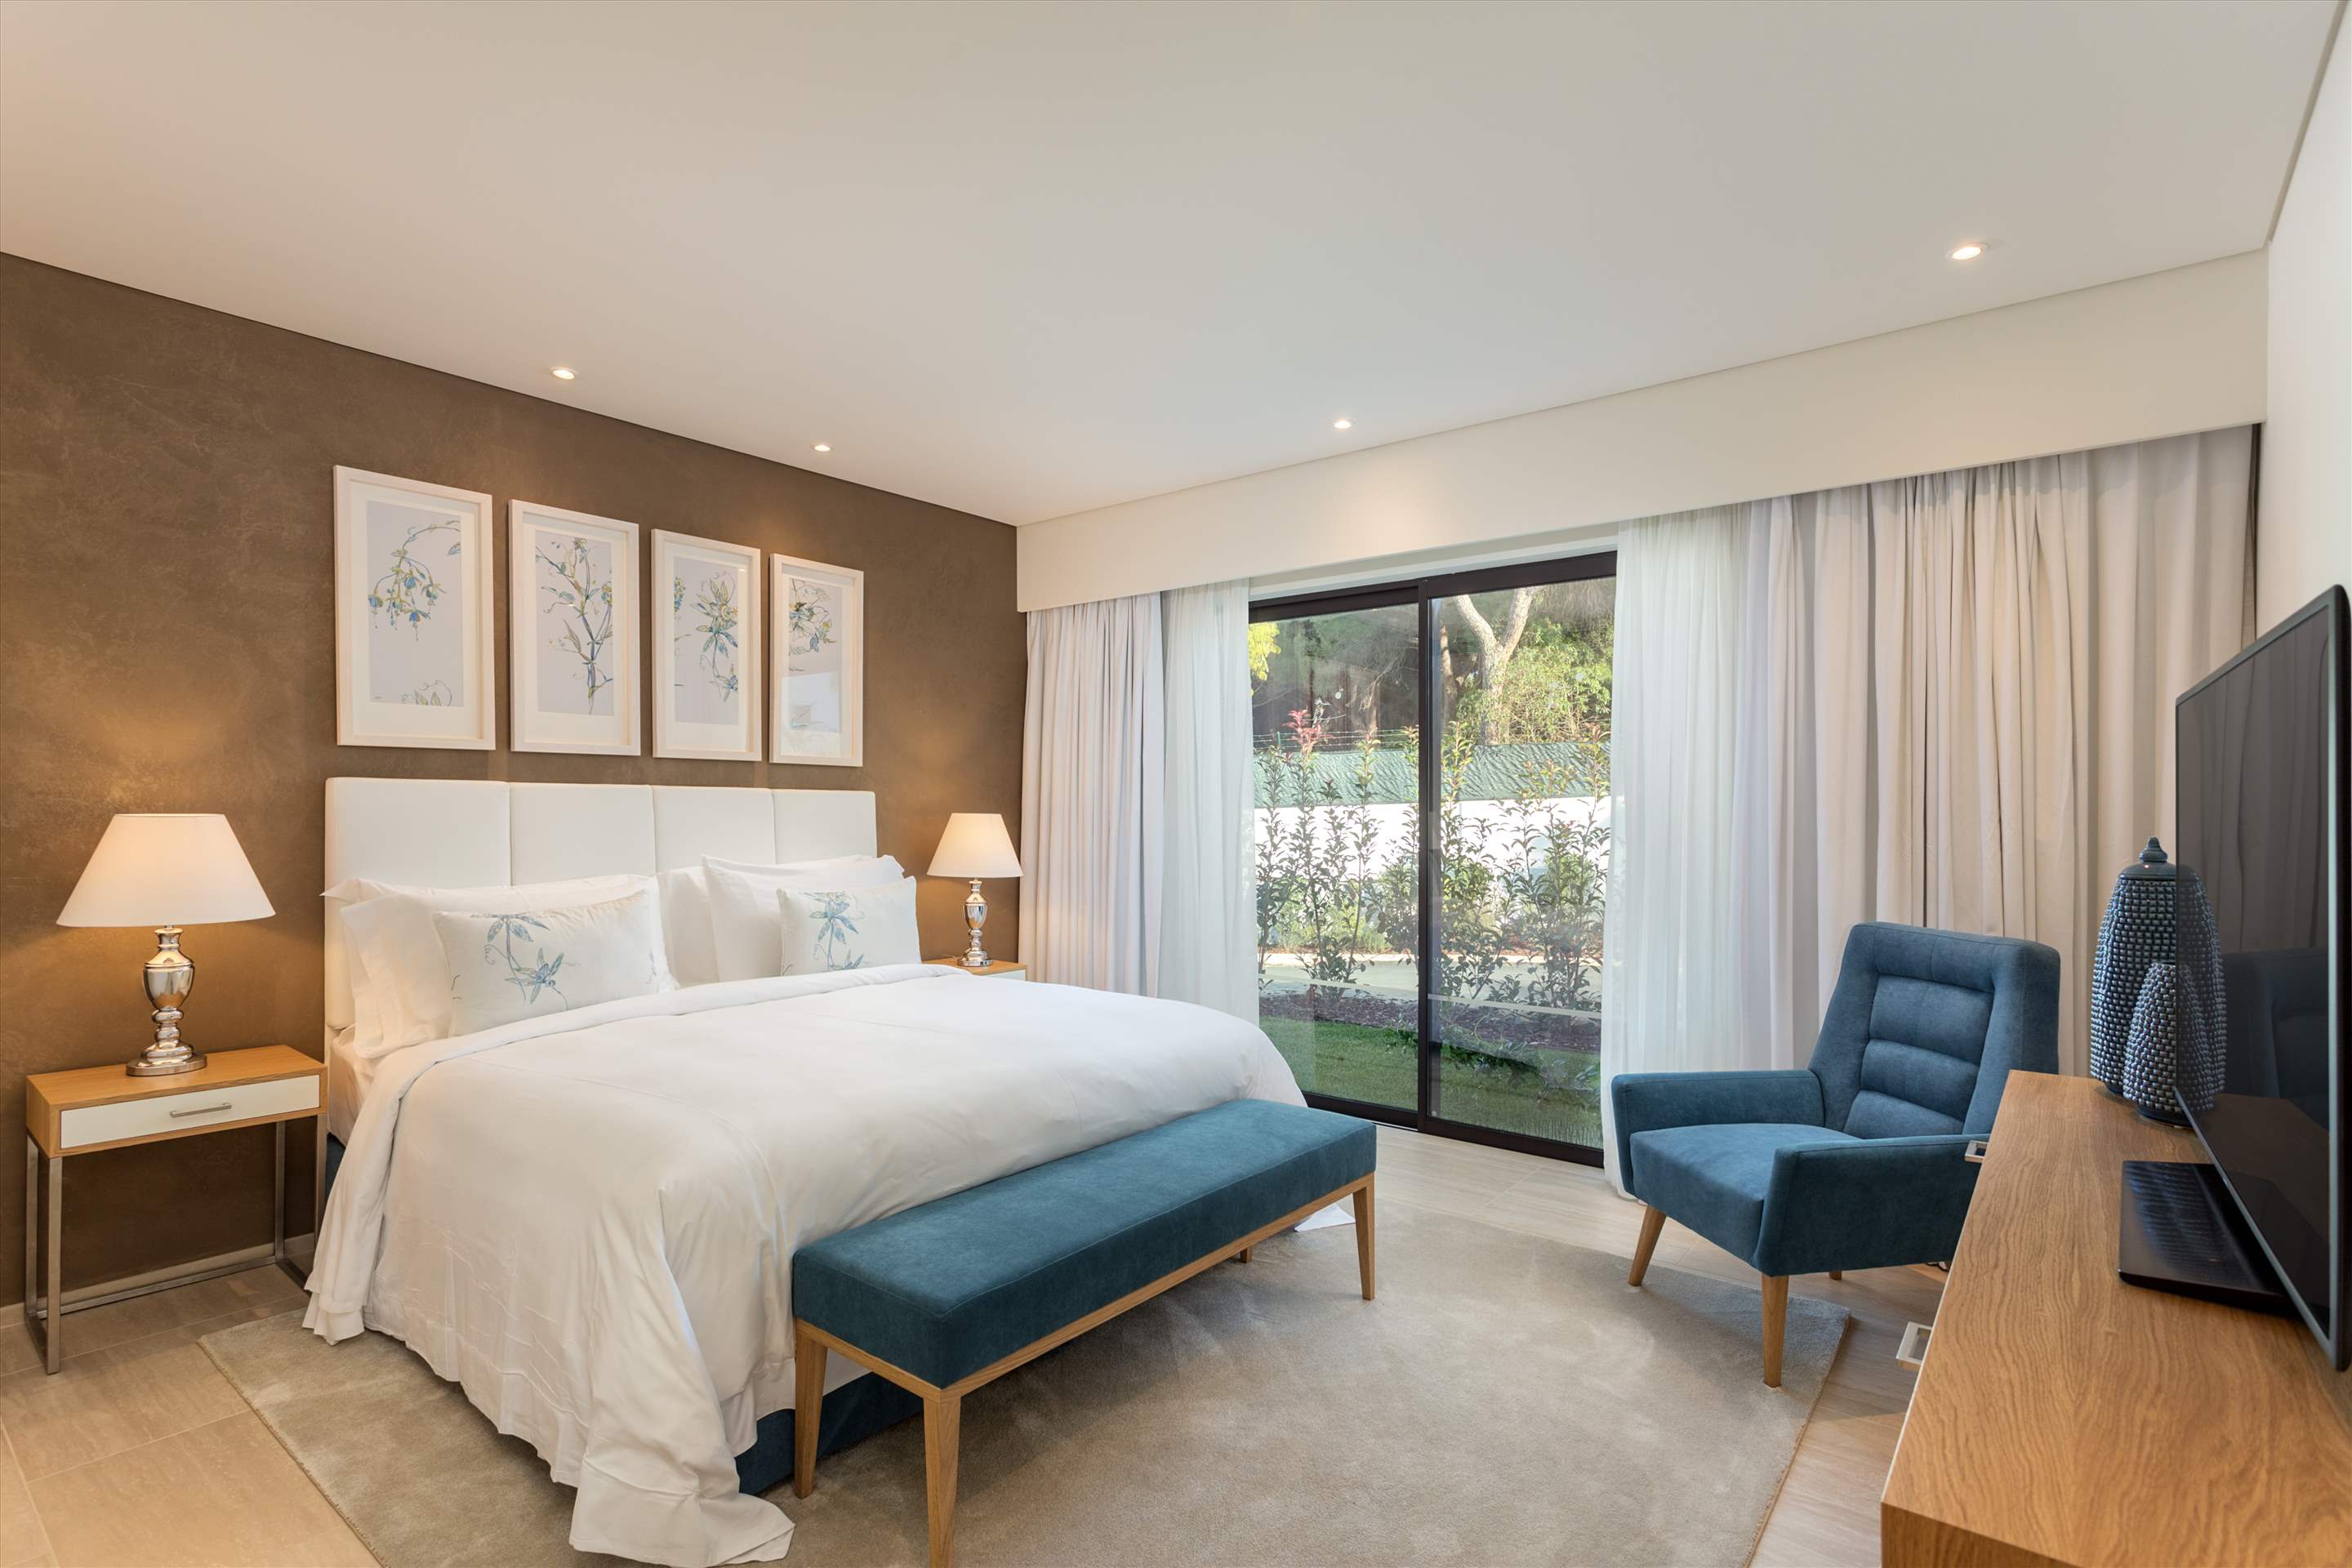 Pine Cliffs Gardens, One Bedroom Suite, S/C Basis, 1 bedroom apartment in Pine Cliffs Resort, Algarve Photo #18